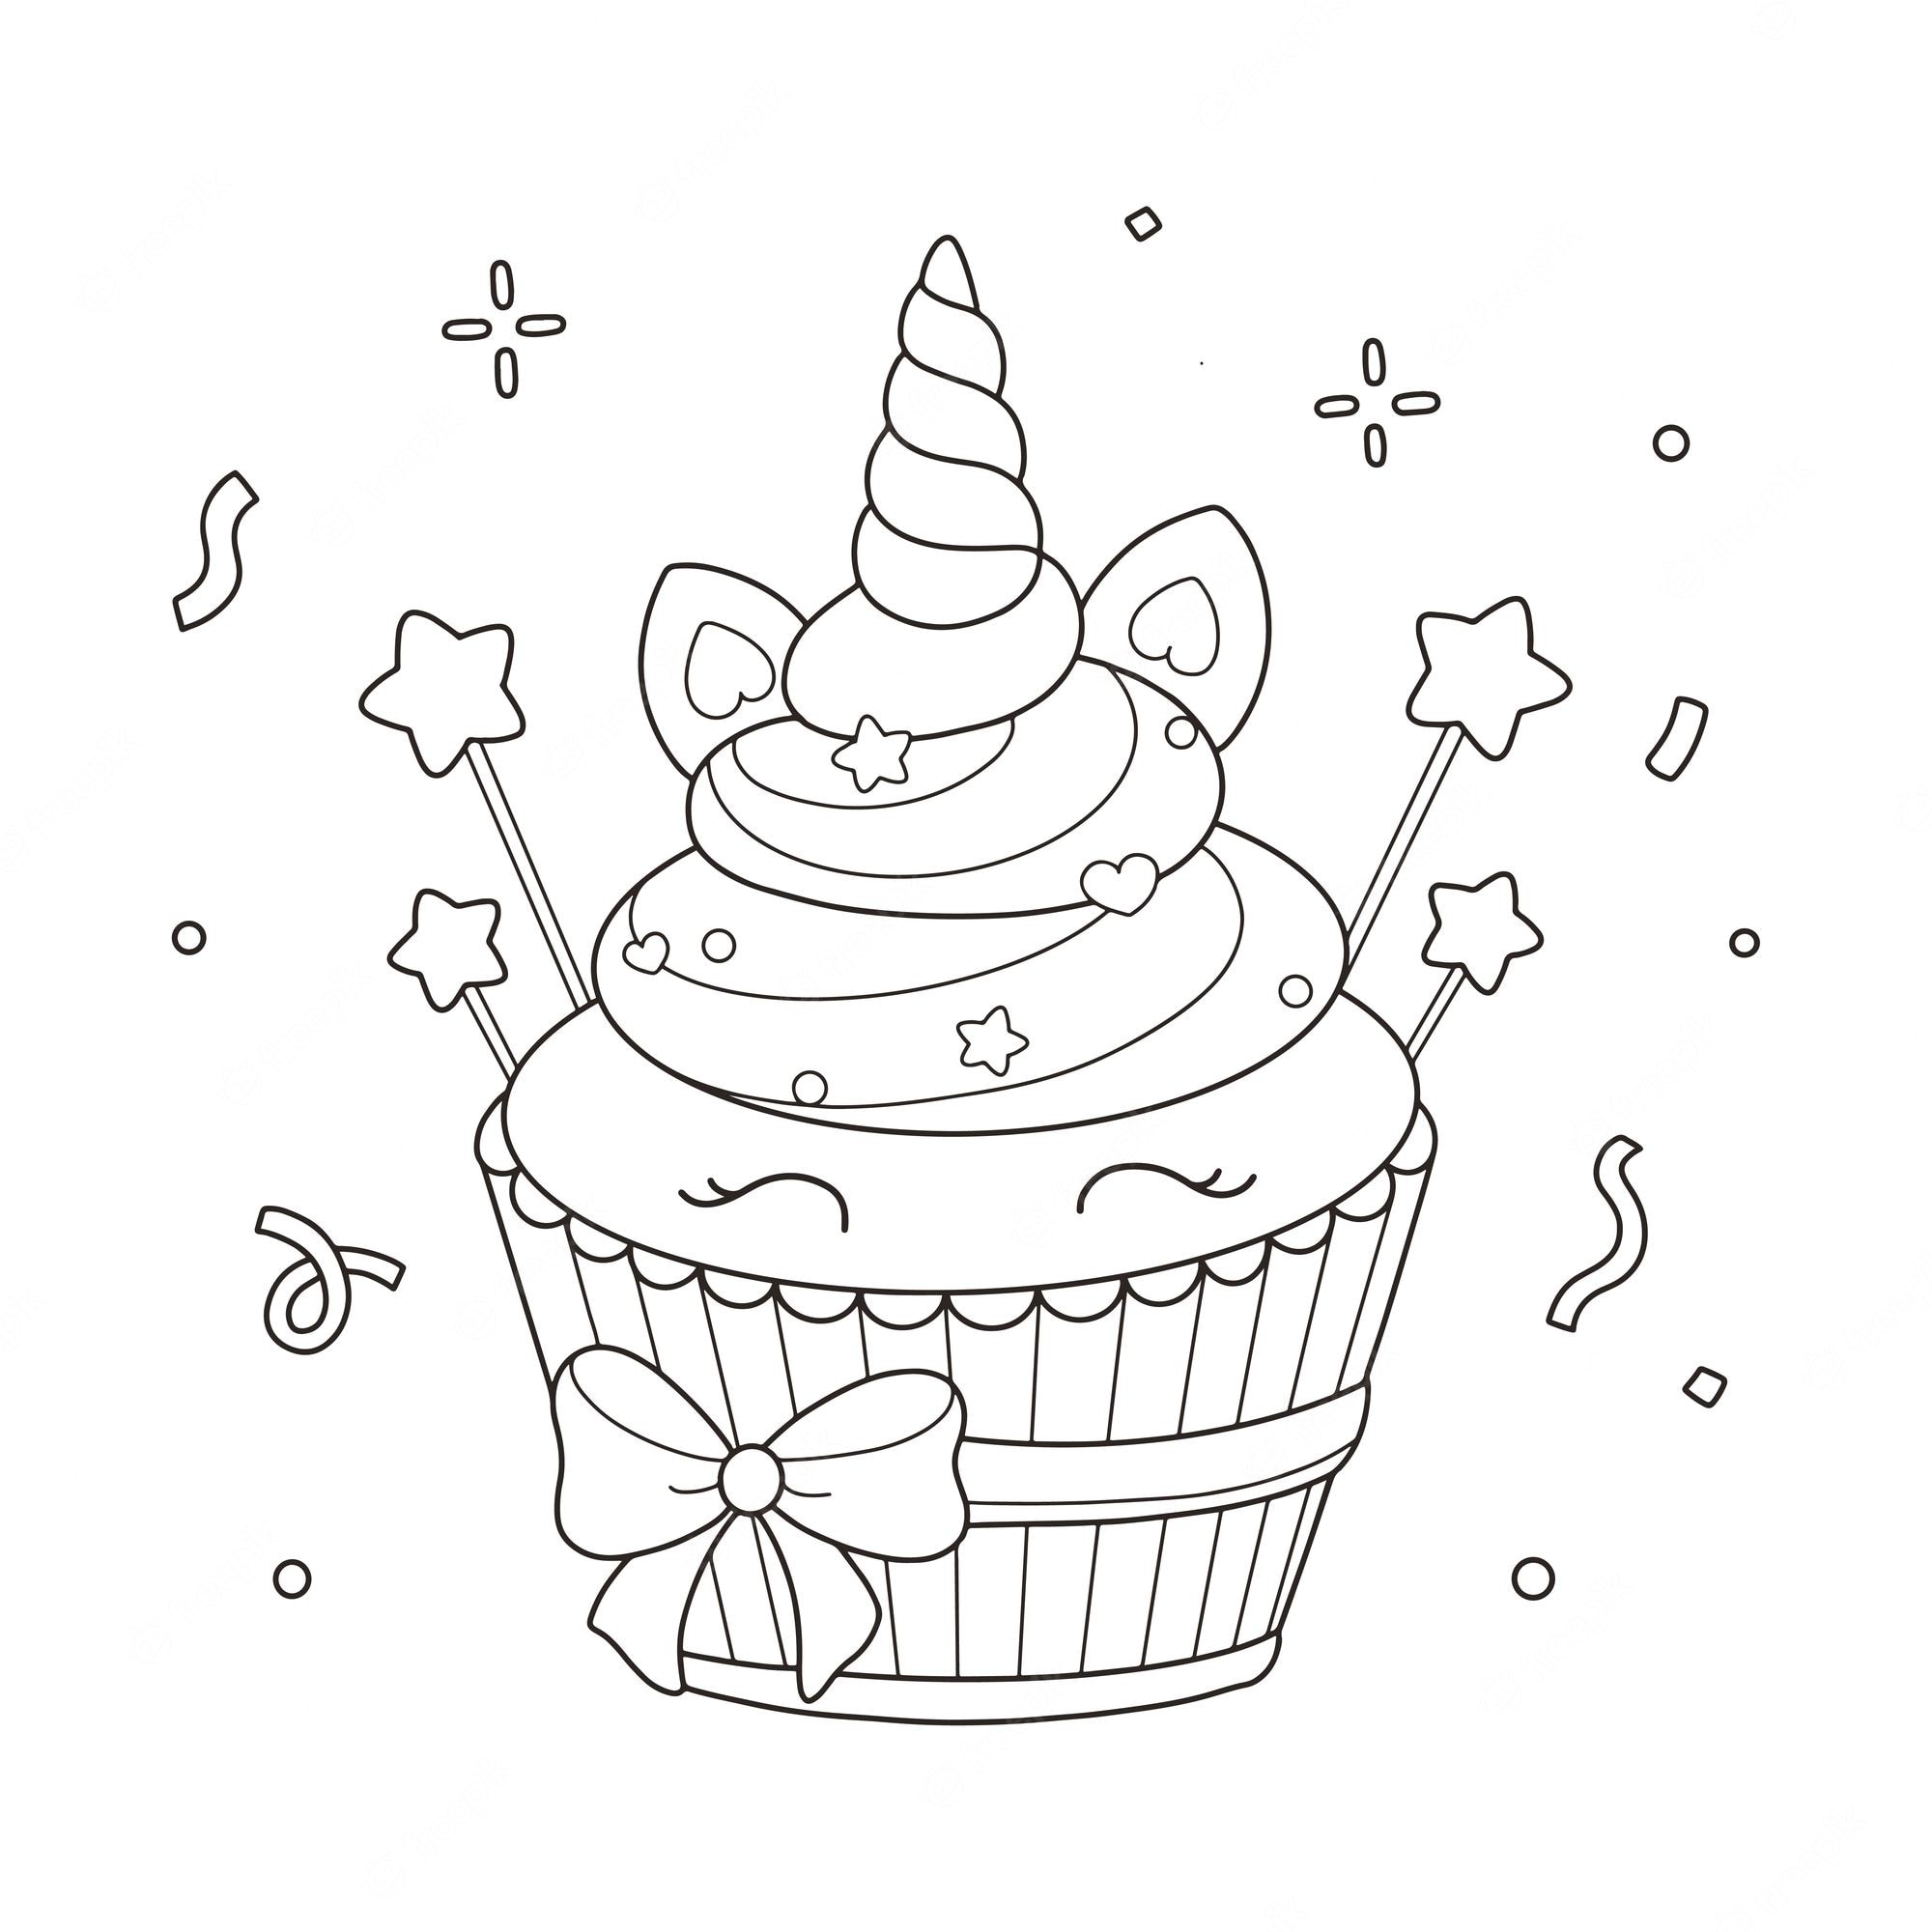 Unicorn cupcake coloring page illustration | Download on Freepik